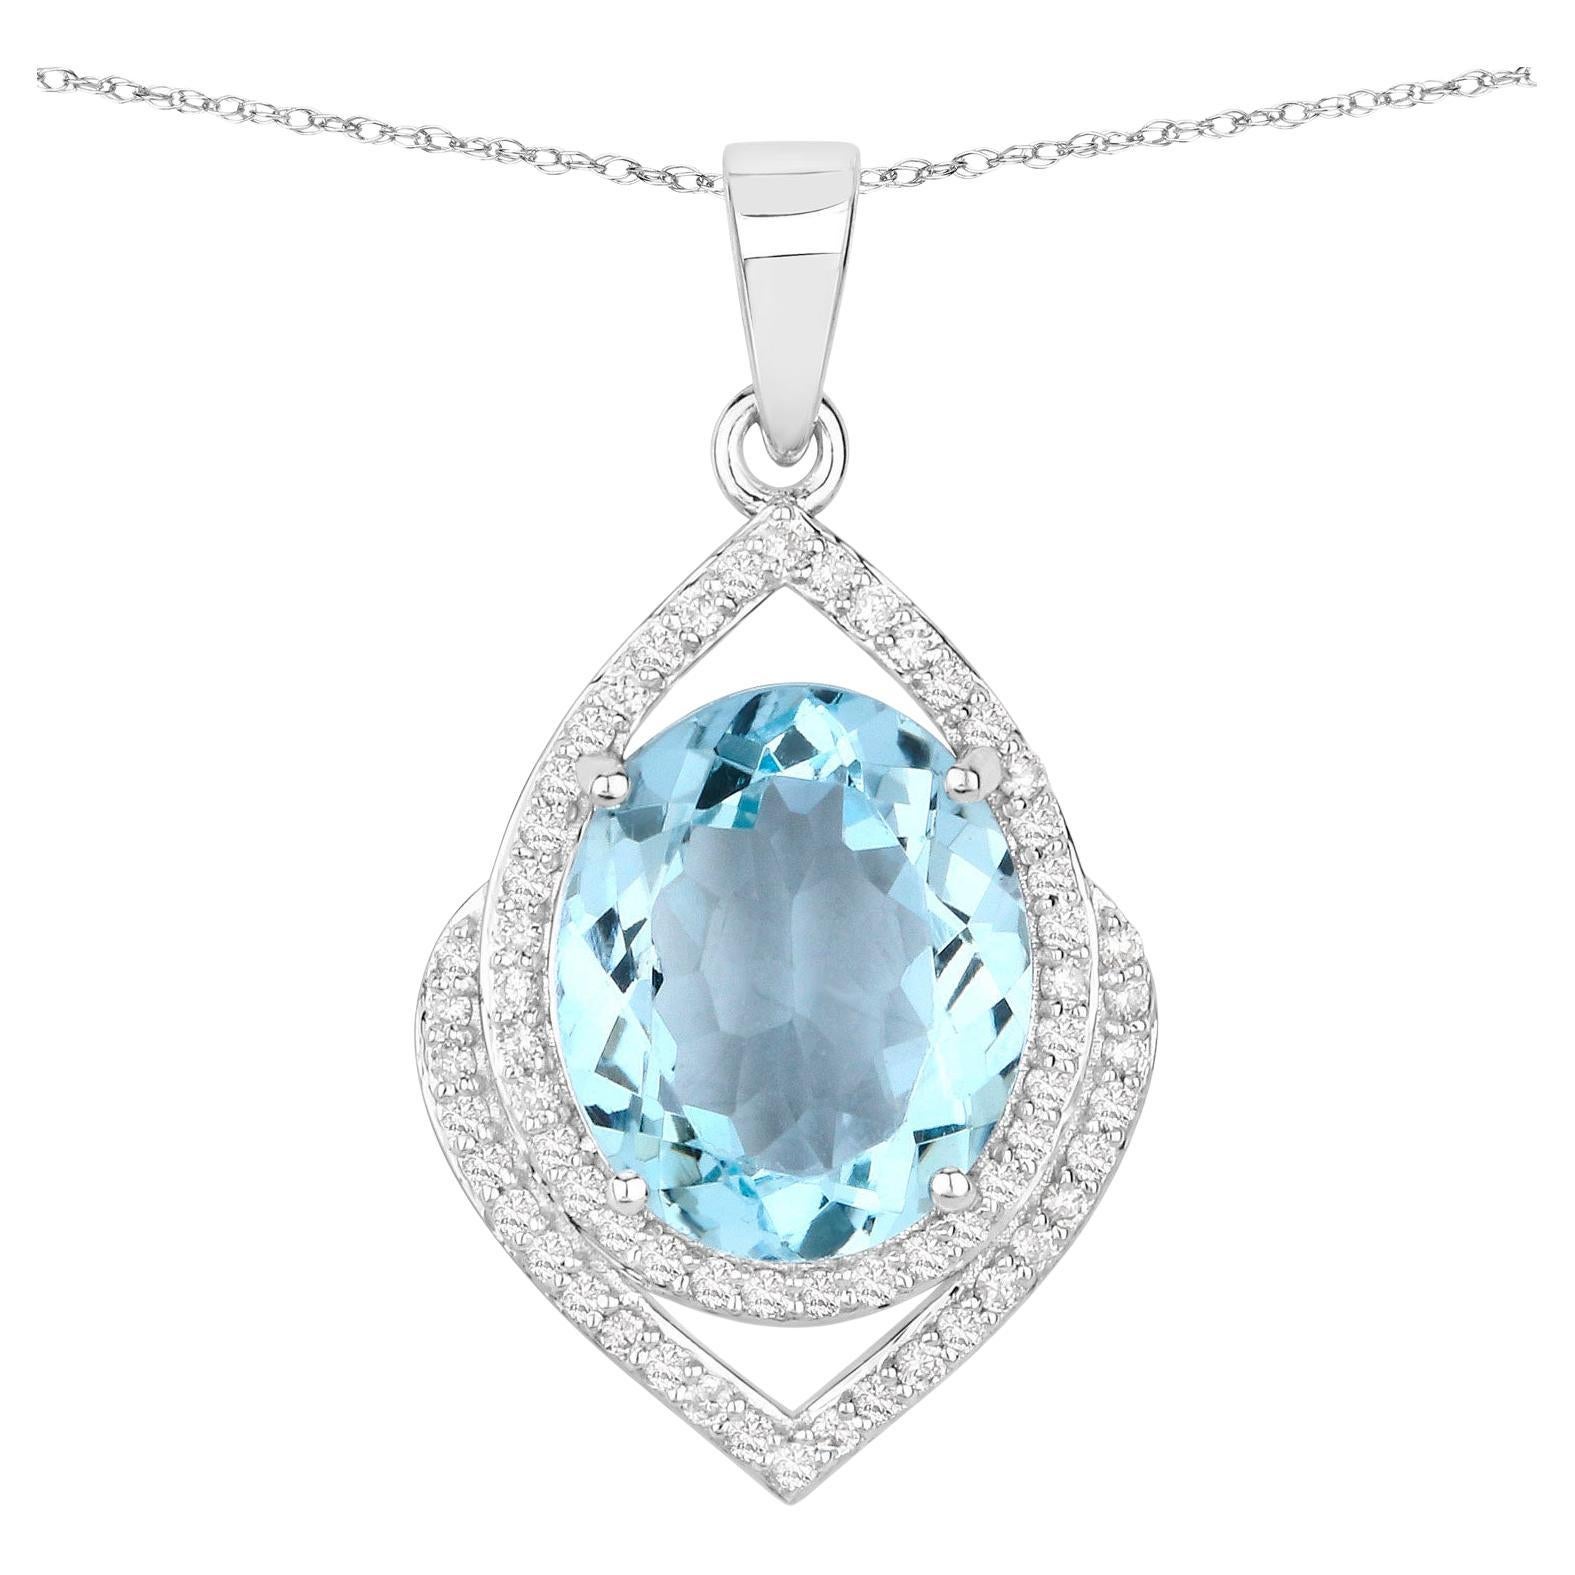 Oval Cut Aquamarine Pendant Necklace Diamond Setting 3.86 Carats 14K White Gold For Sale